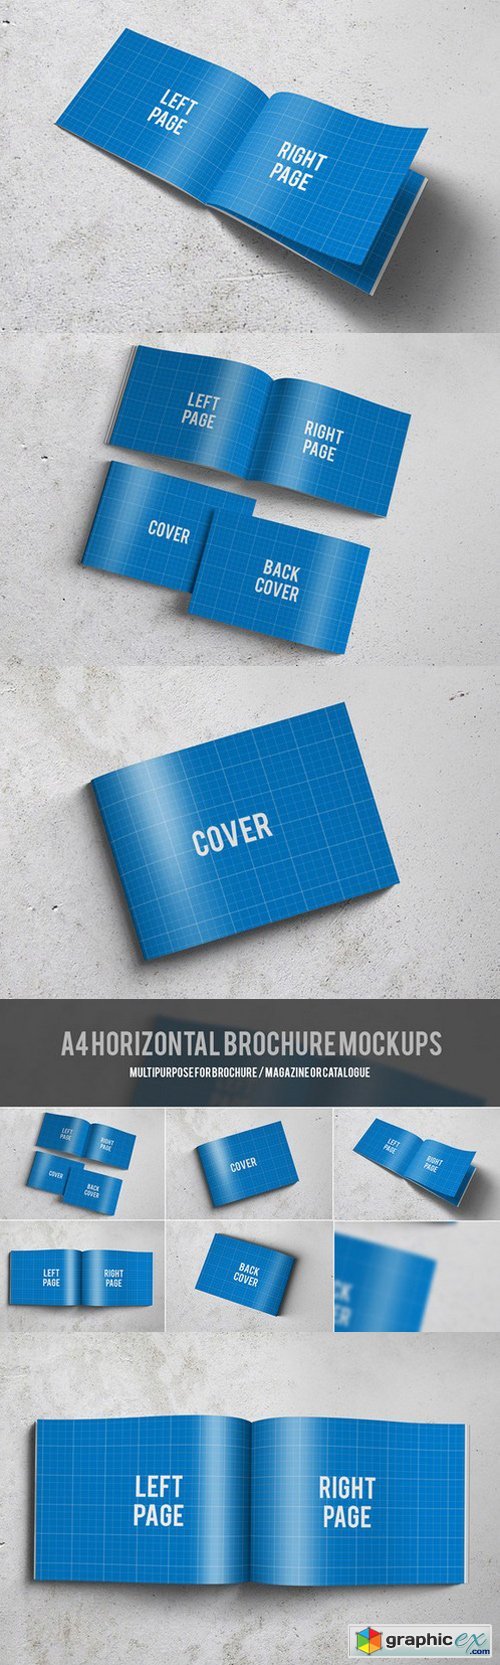 A4 Horizontal Brochure Mockups